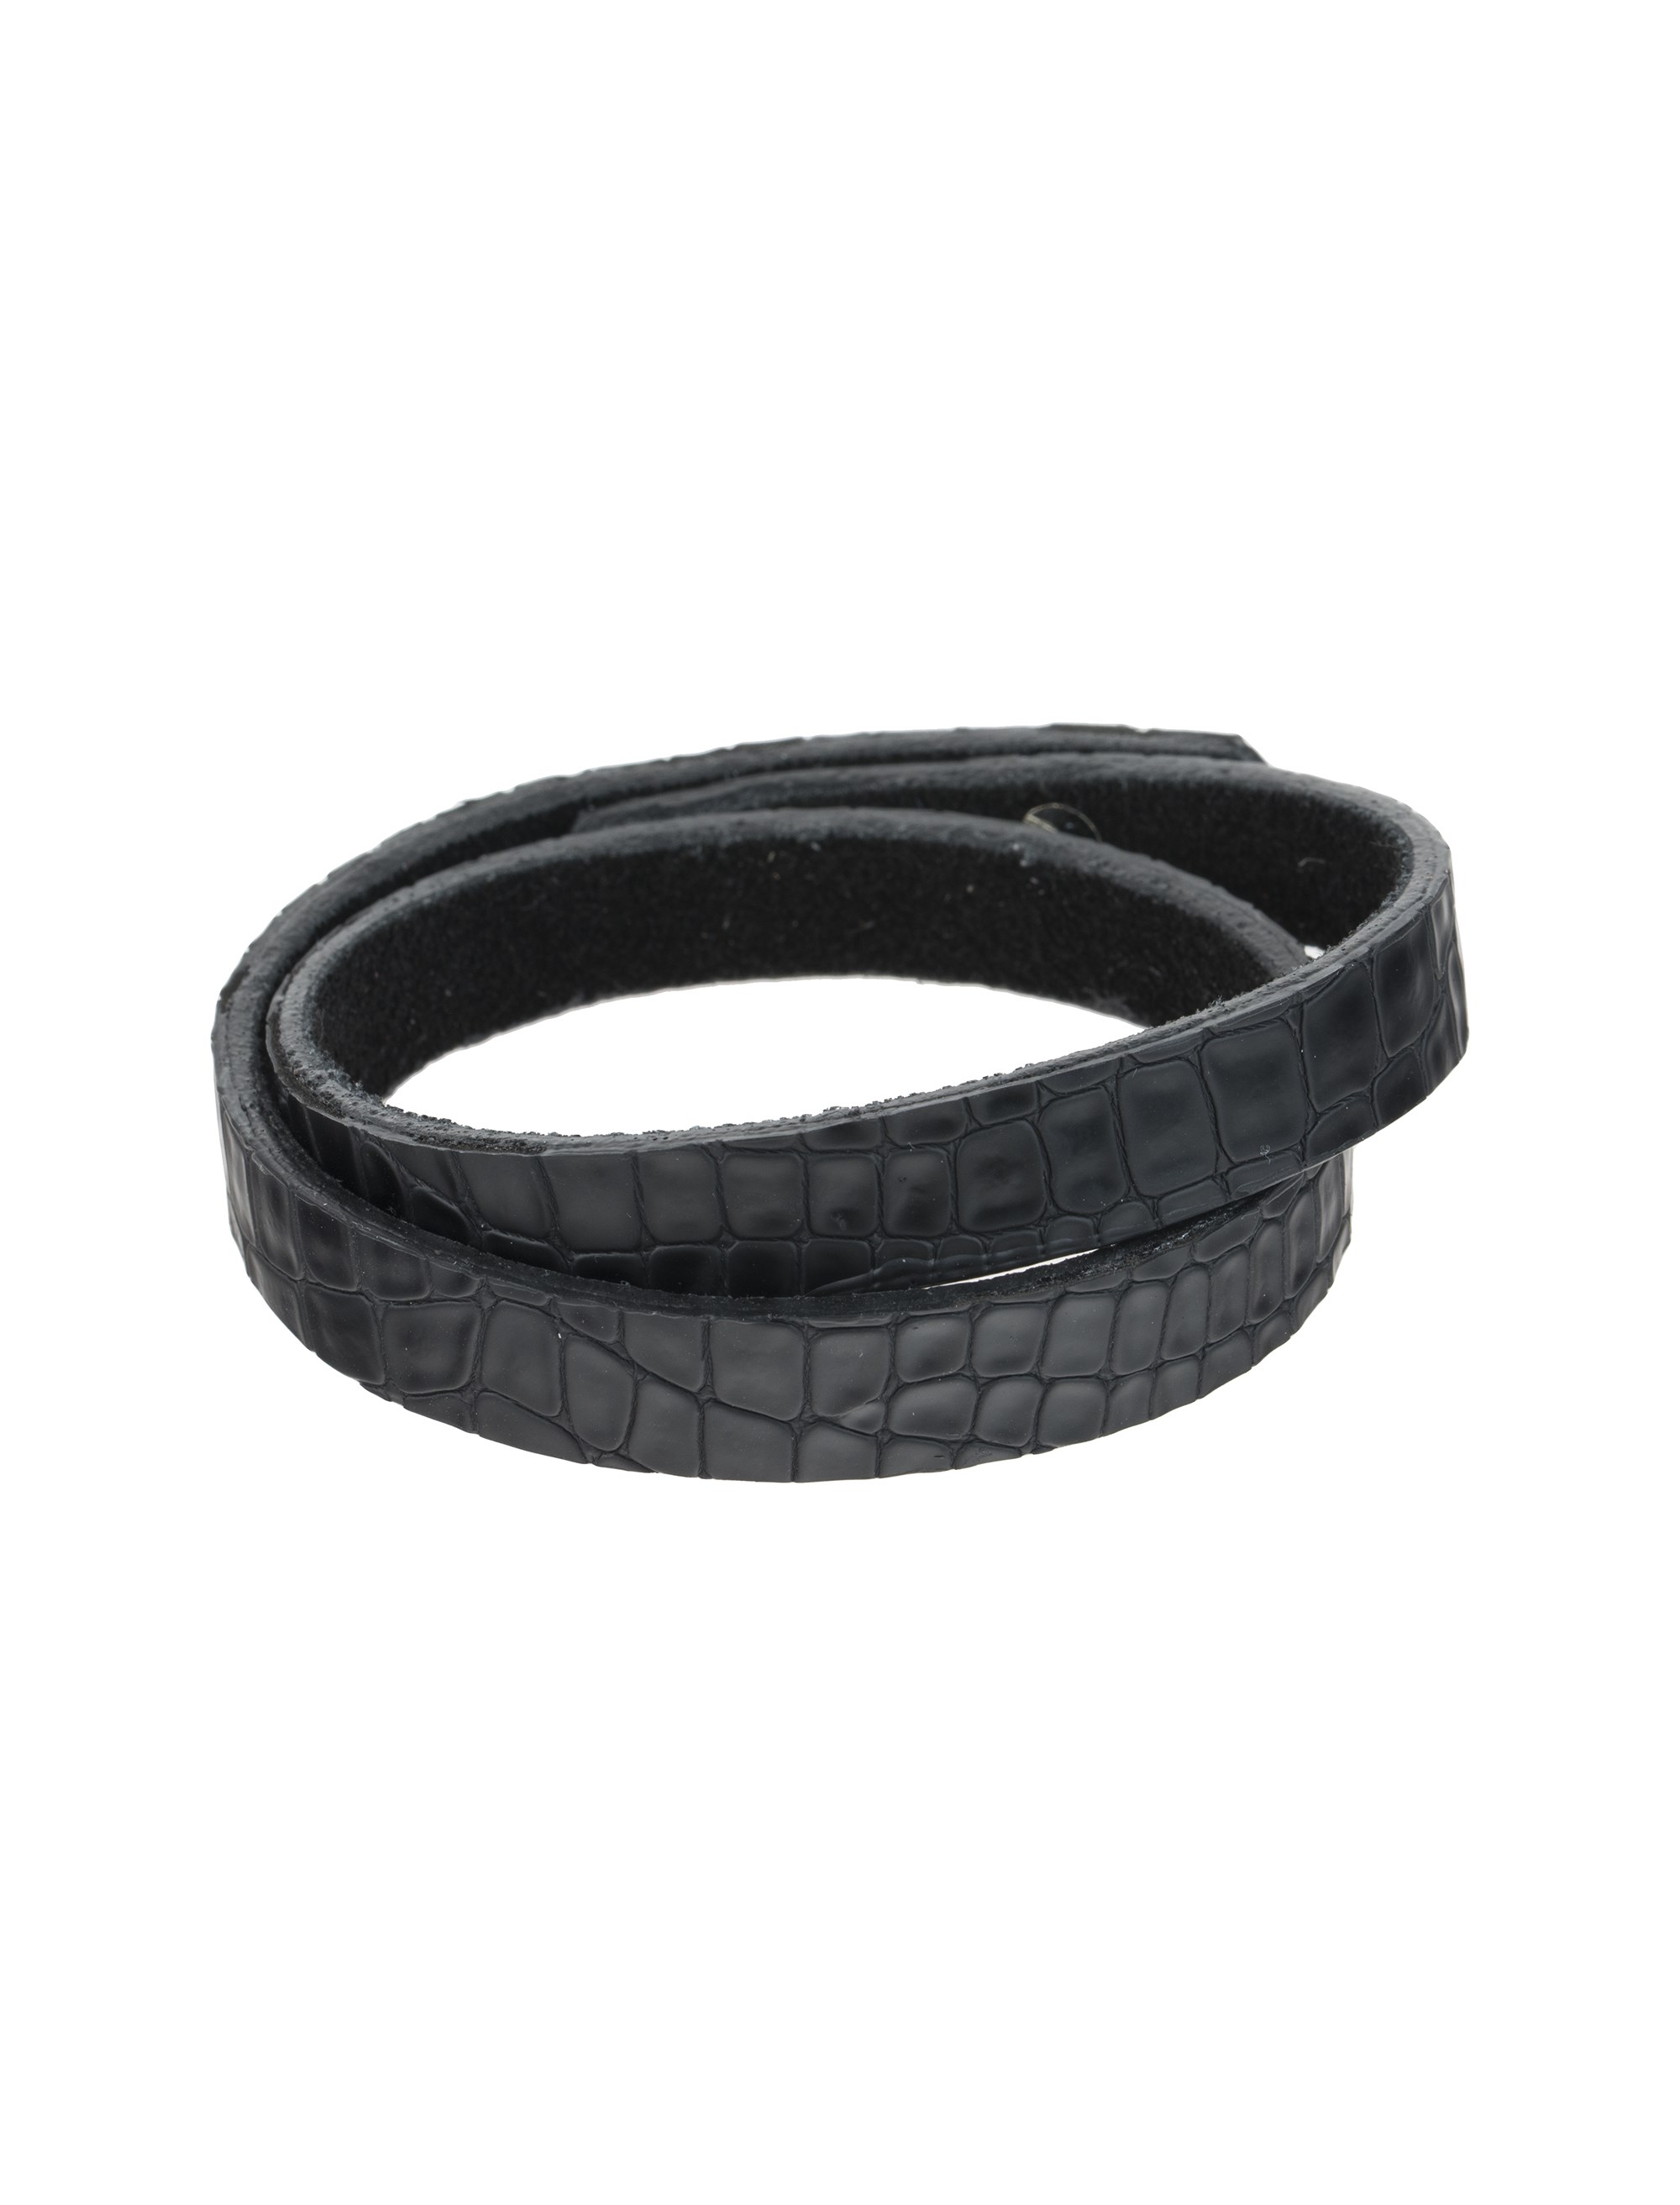 دستبند چرم مردانه - ماکو دیزاین سایز 45 cm